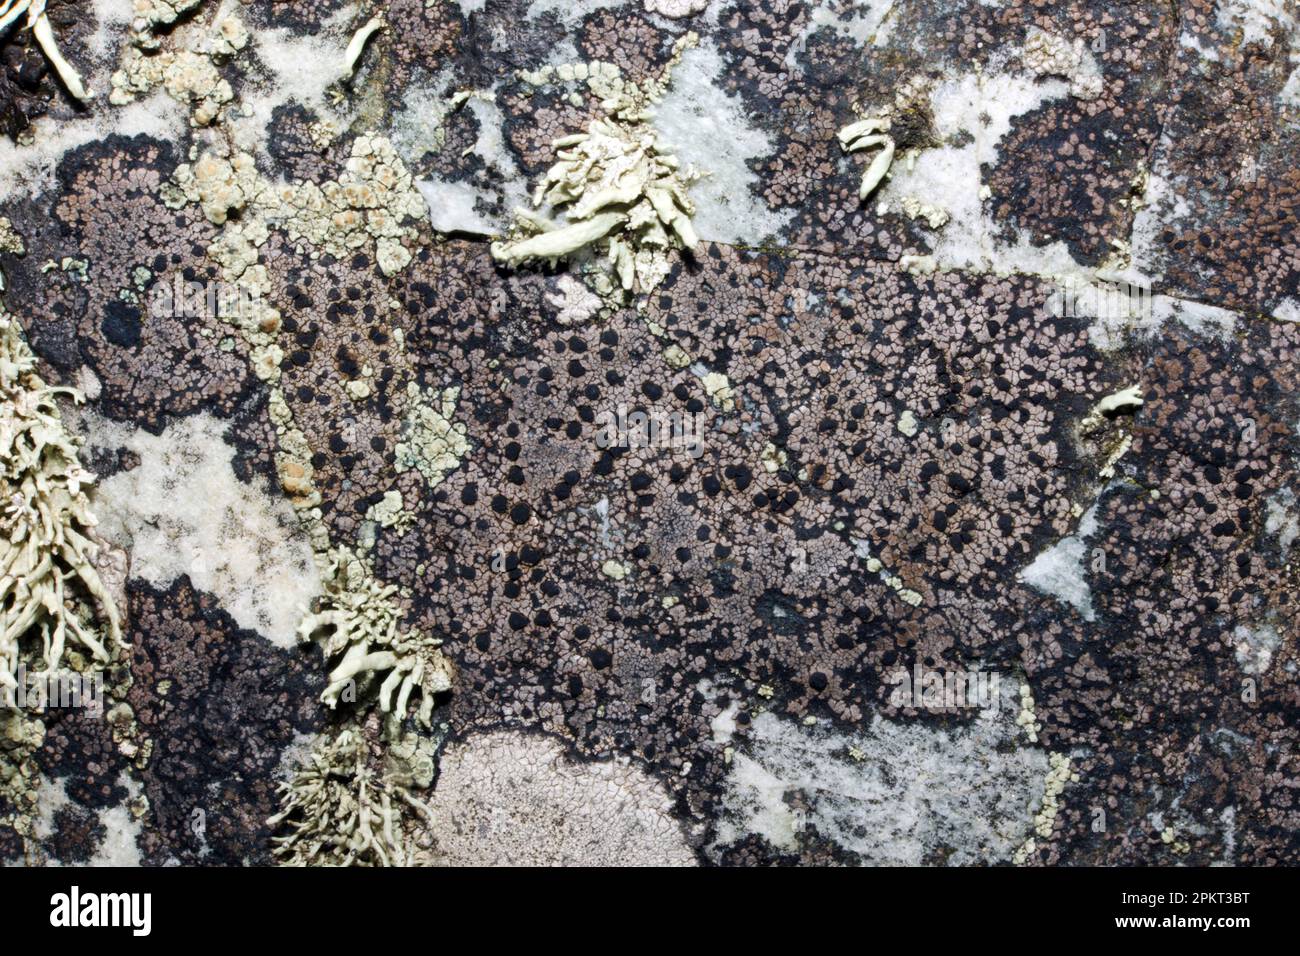 Rhizocarpon richardii is a crustose lichen found on acidic coastal rocks. It is found in Europe and North America. Stock Photo